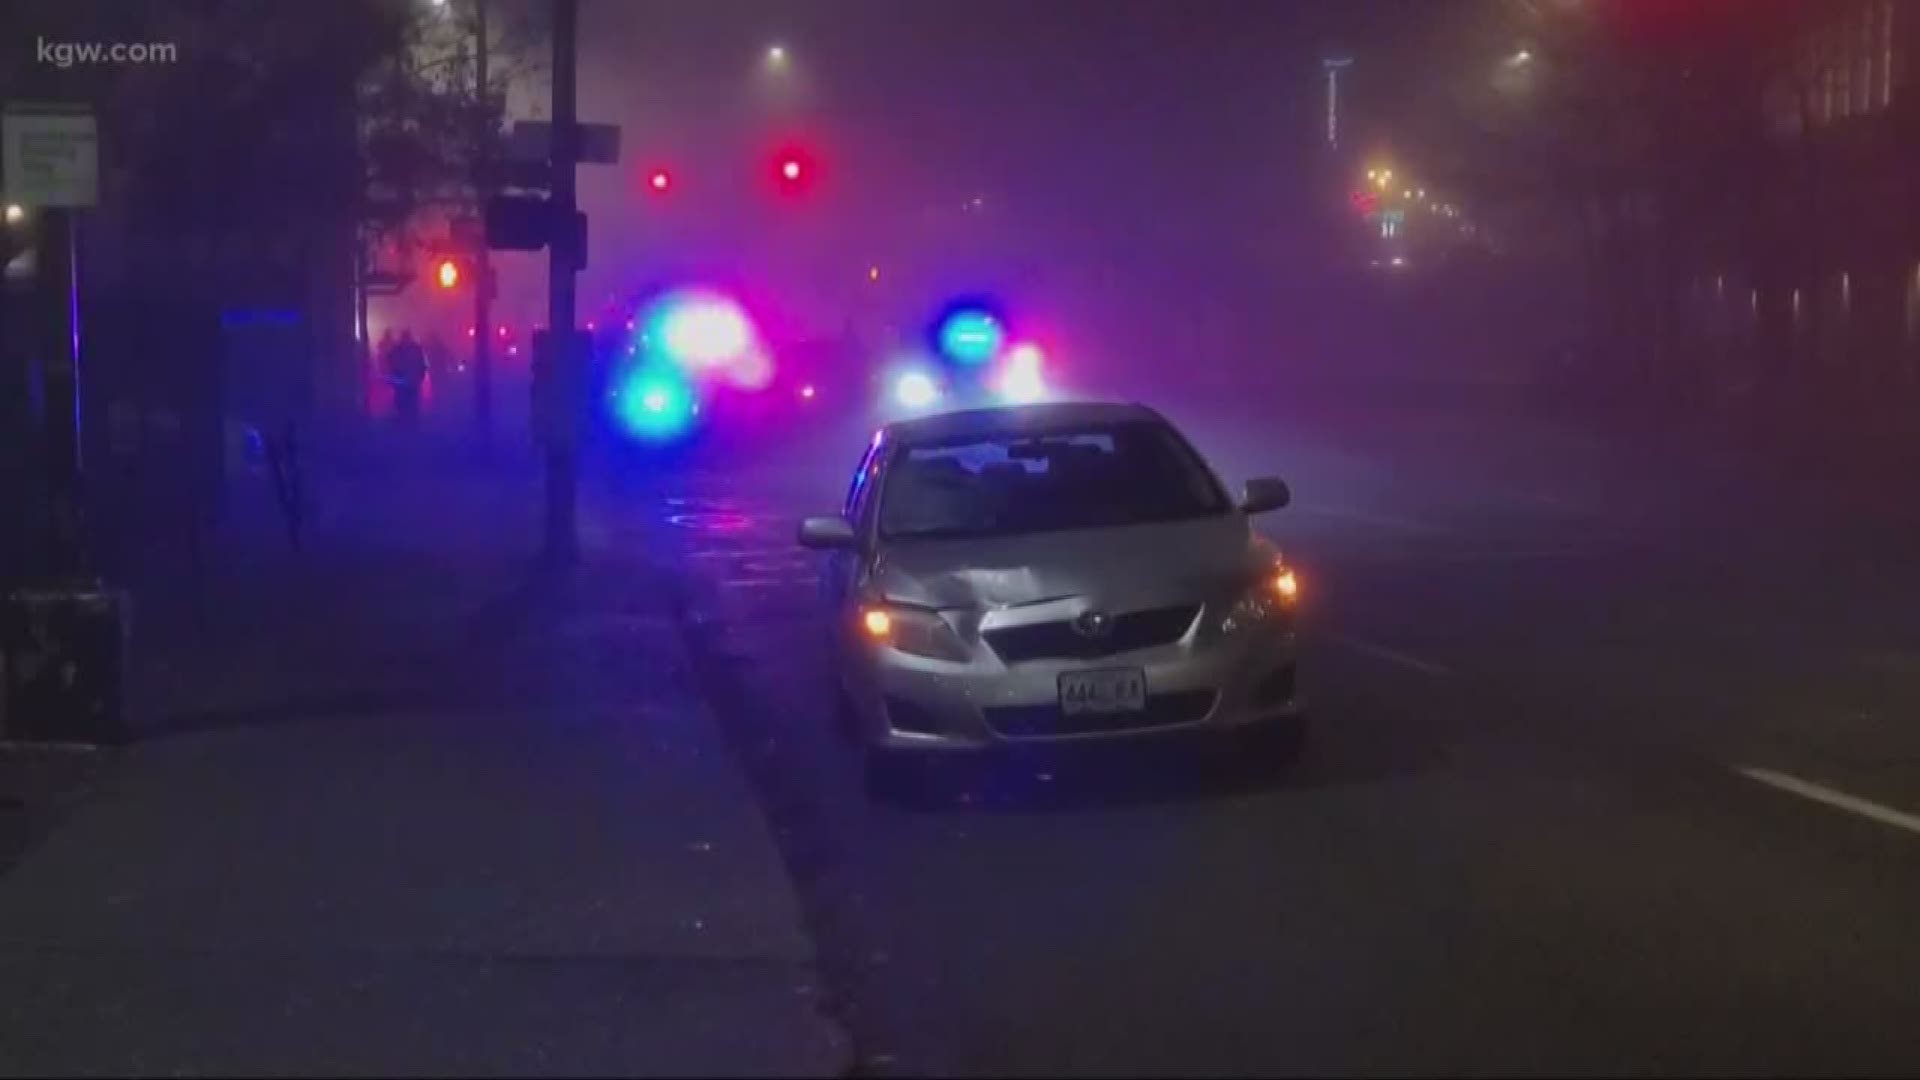 Suspected DUII driver hits 2 pedestrians